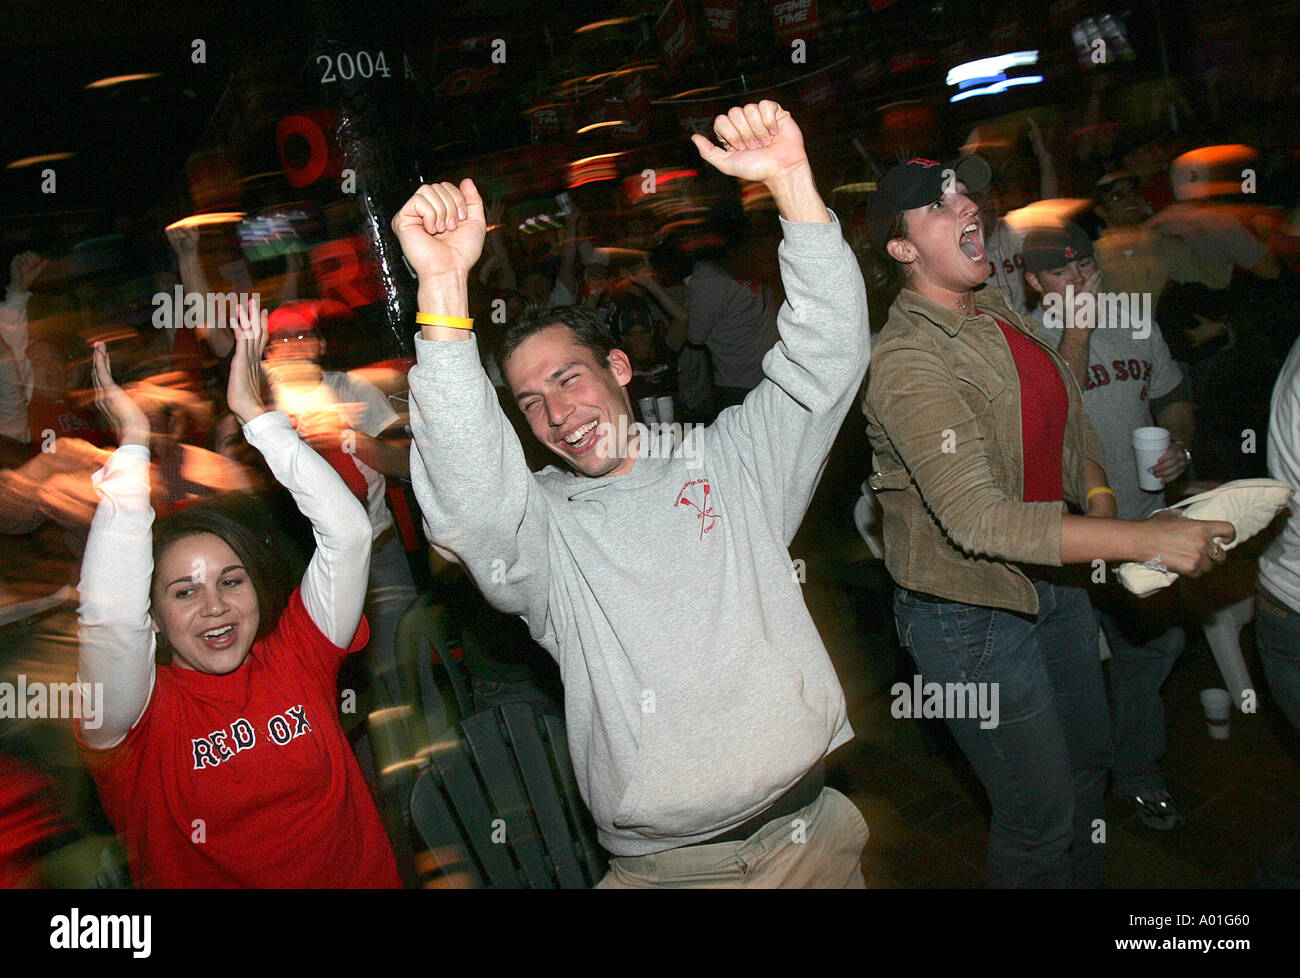 El equipo de béisbol Red Sox ventiladores ruidosos celebrar una victoria Foto de stock